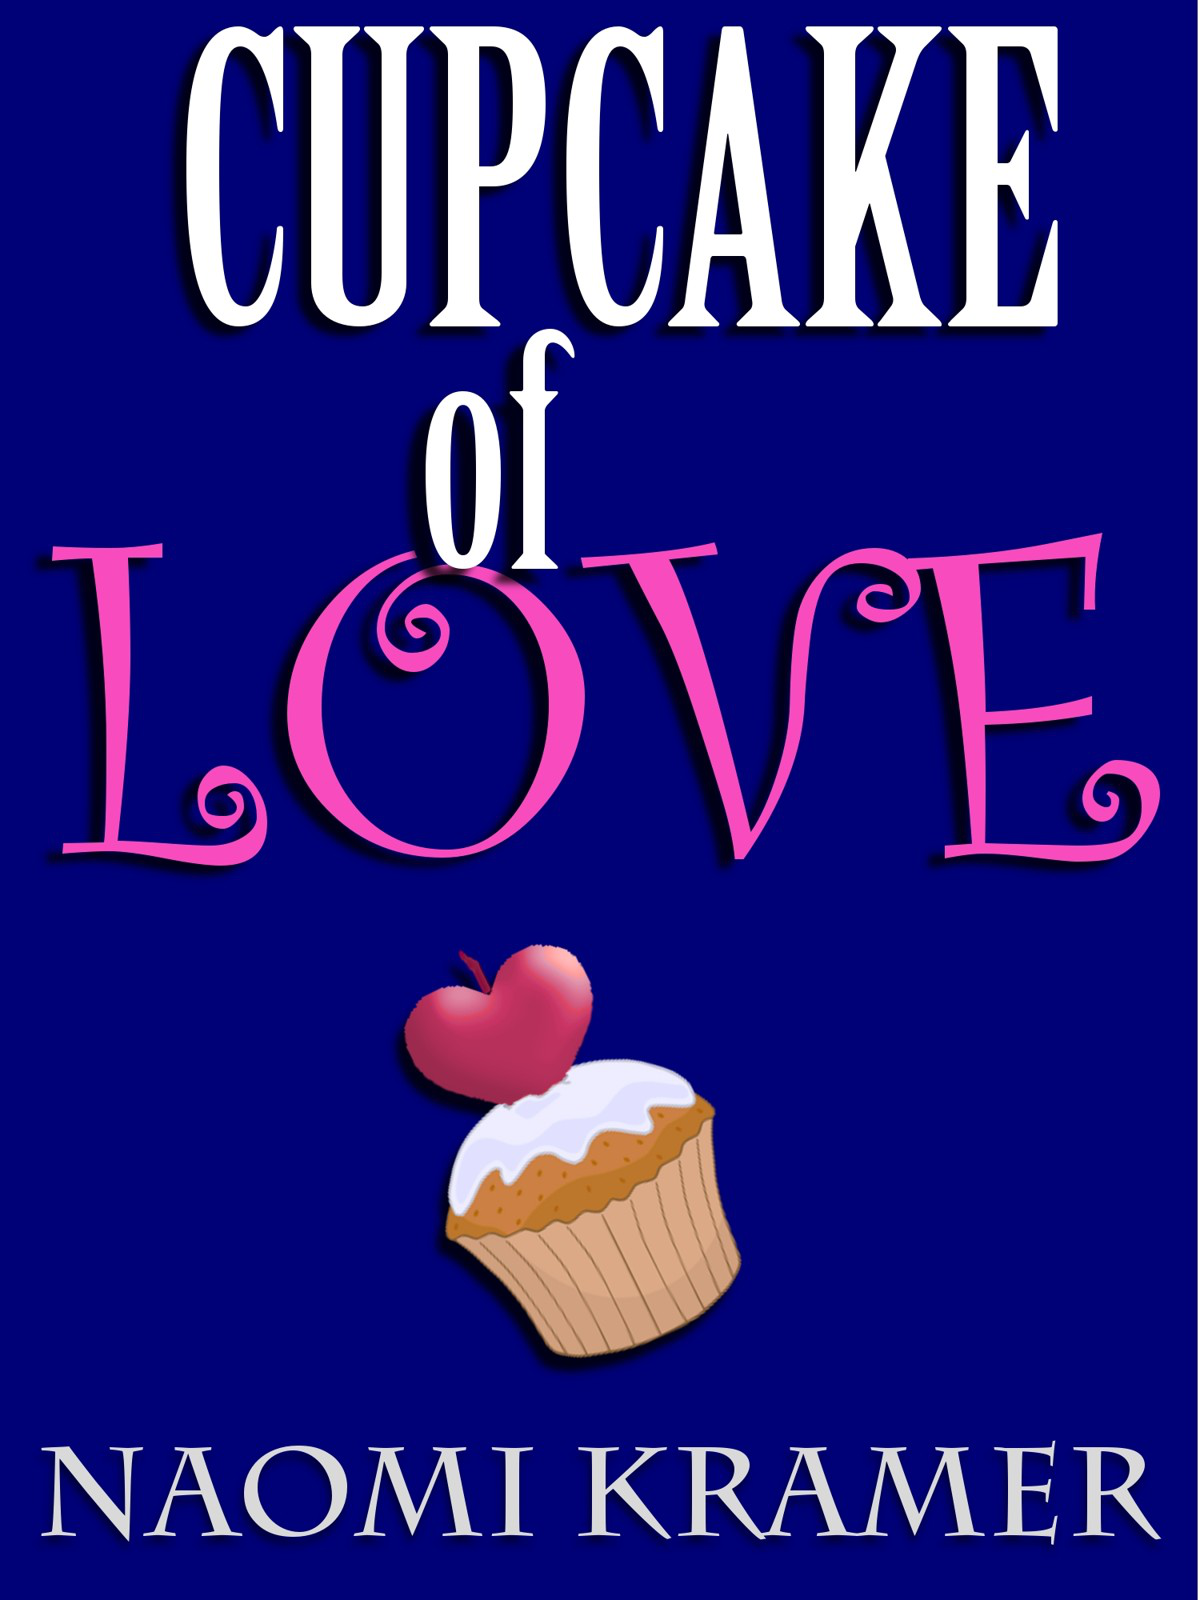 Cupcake of Love